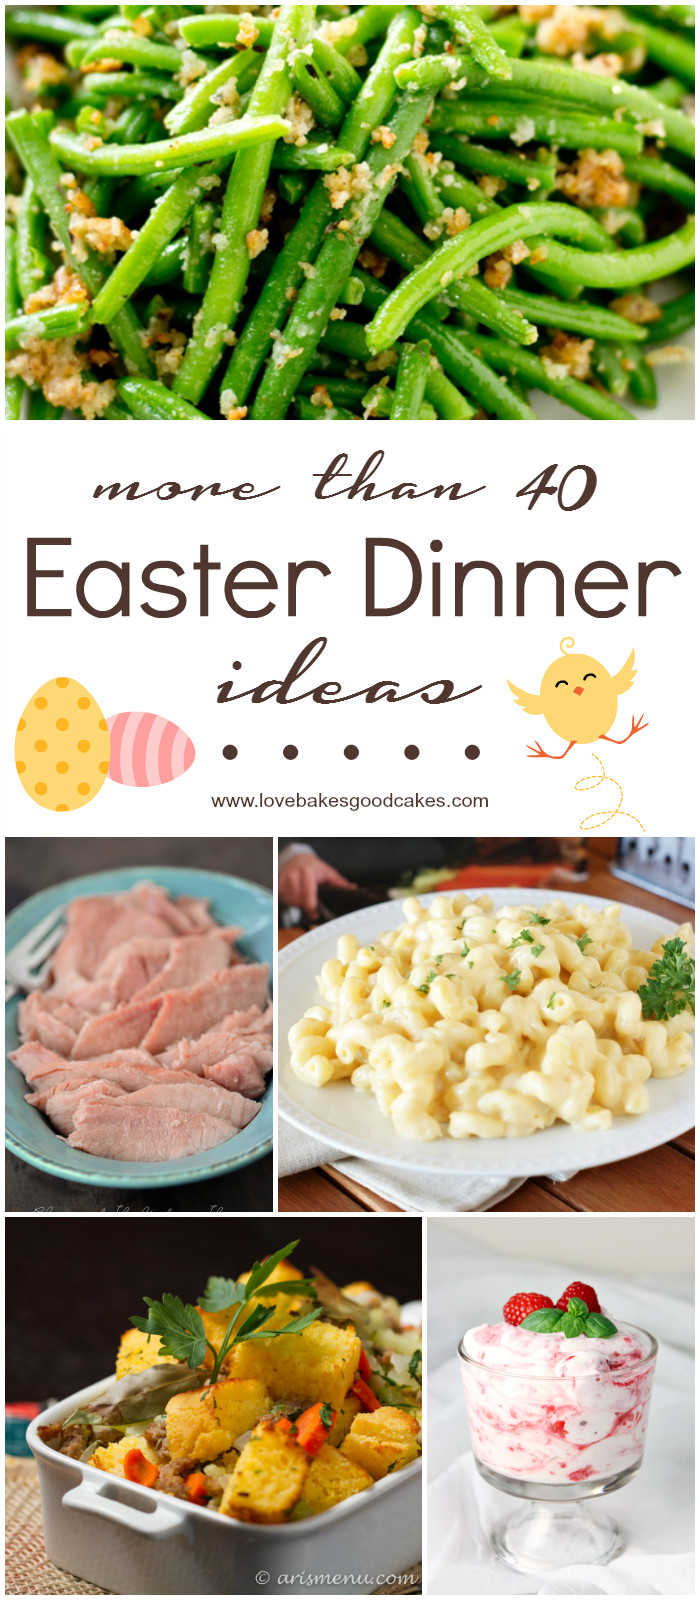 Easter Dinner Suggestions
 More than 40 Easter Dinner Ideas